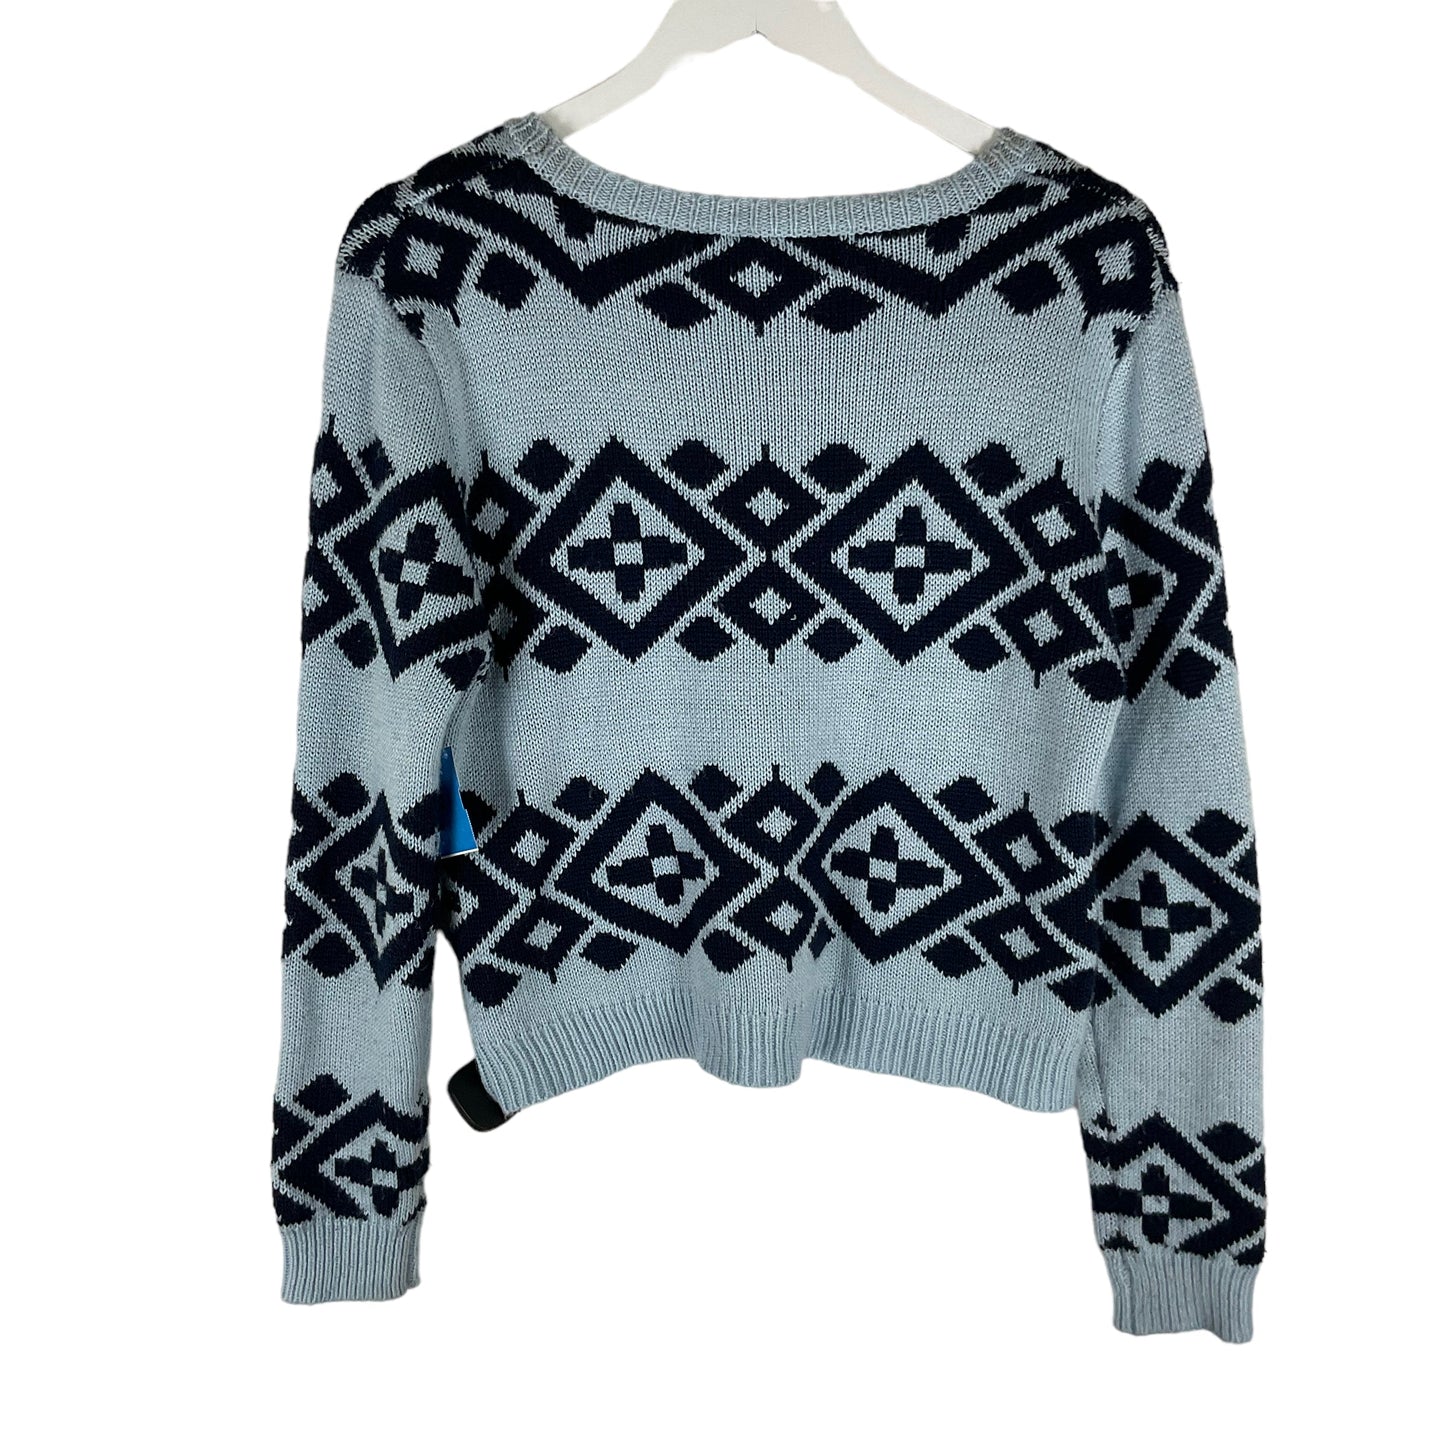 Sweater By Blue Rain  Size: M